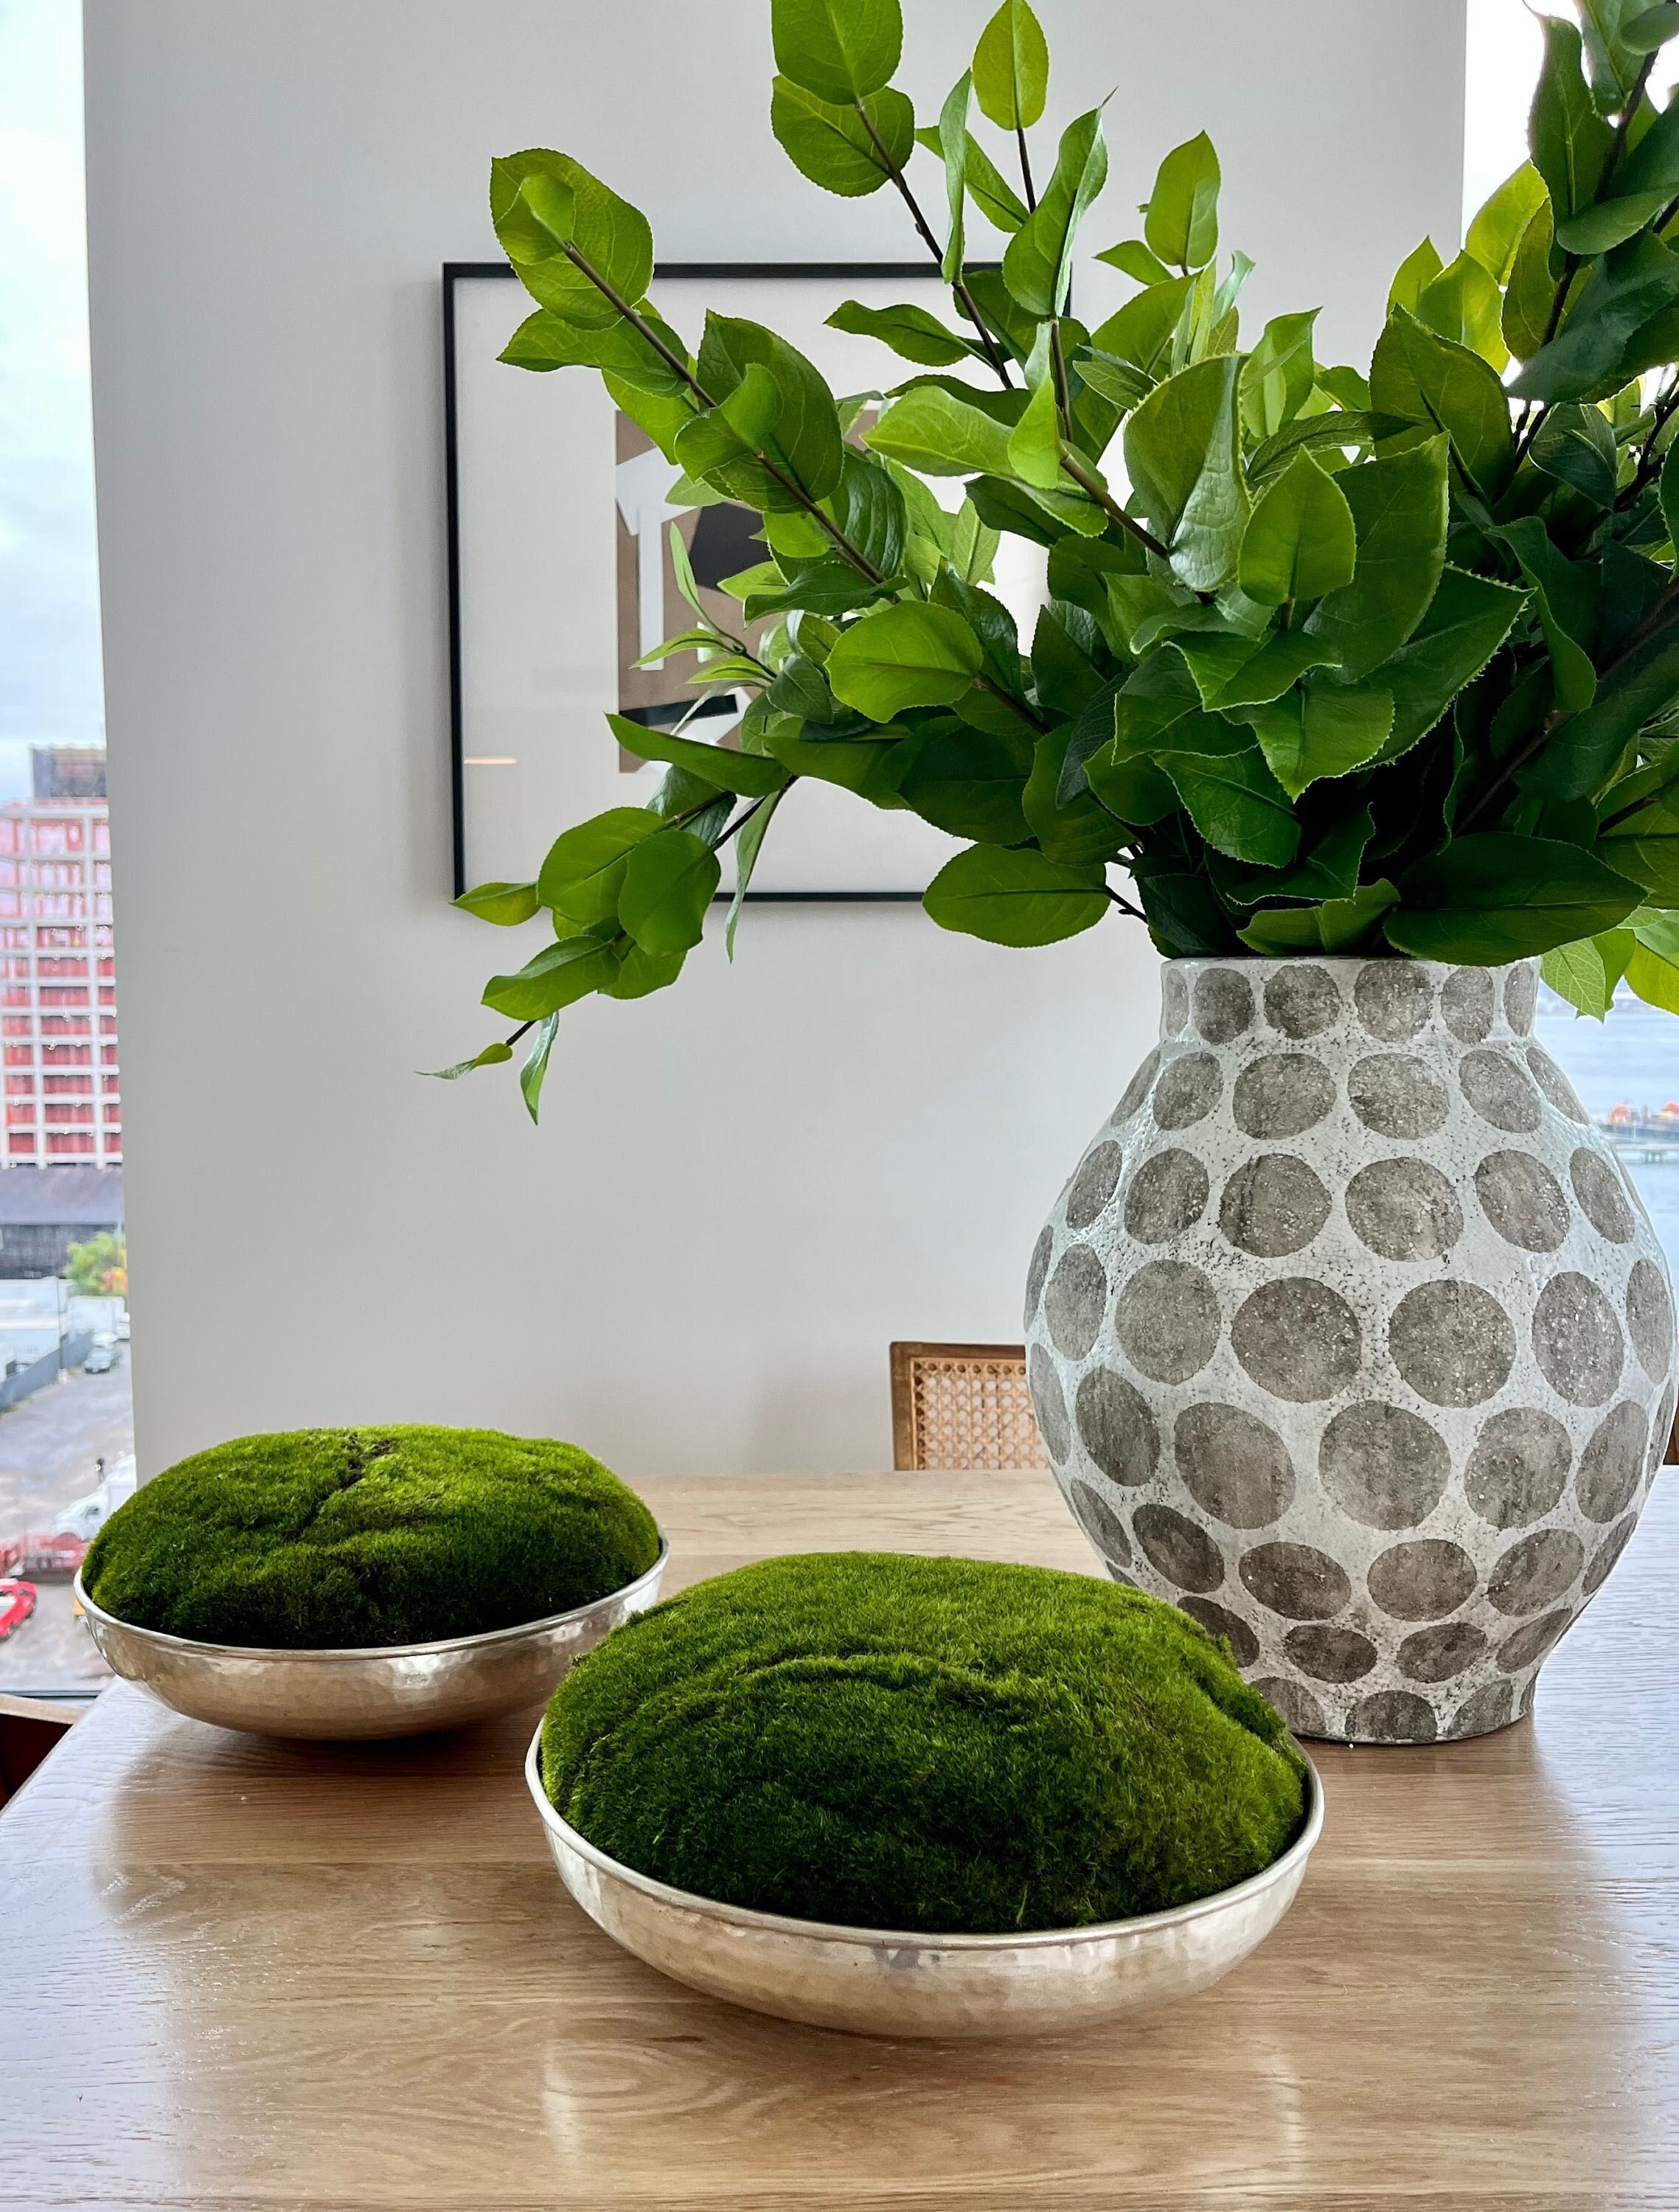 Live moss bowls - Pots & Planters - Brisbane, Queensland, Australia